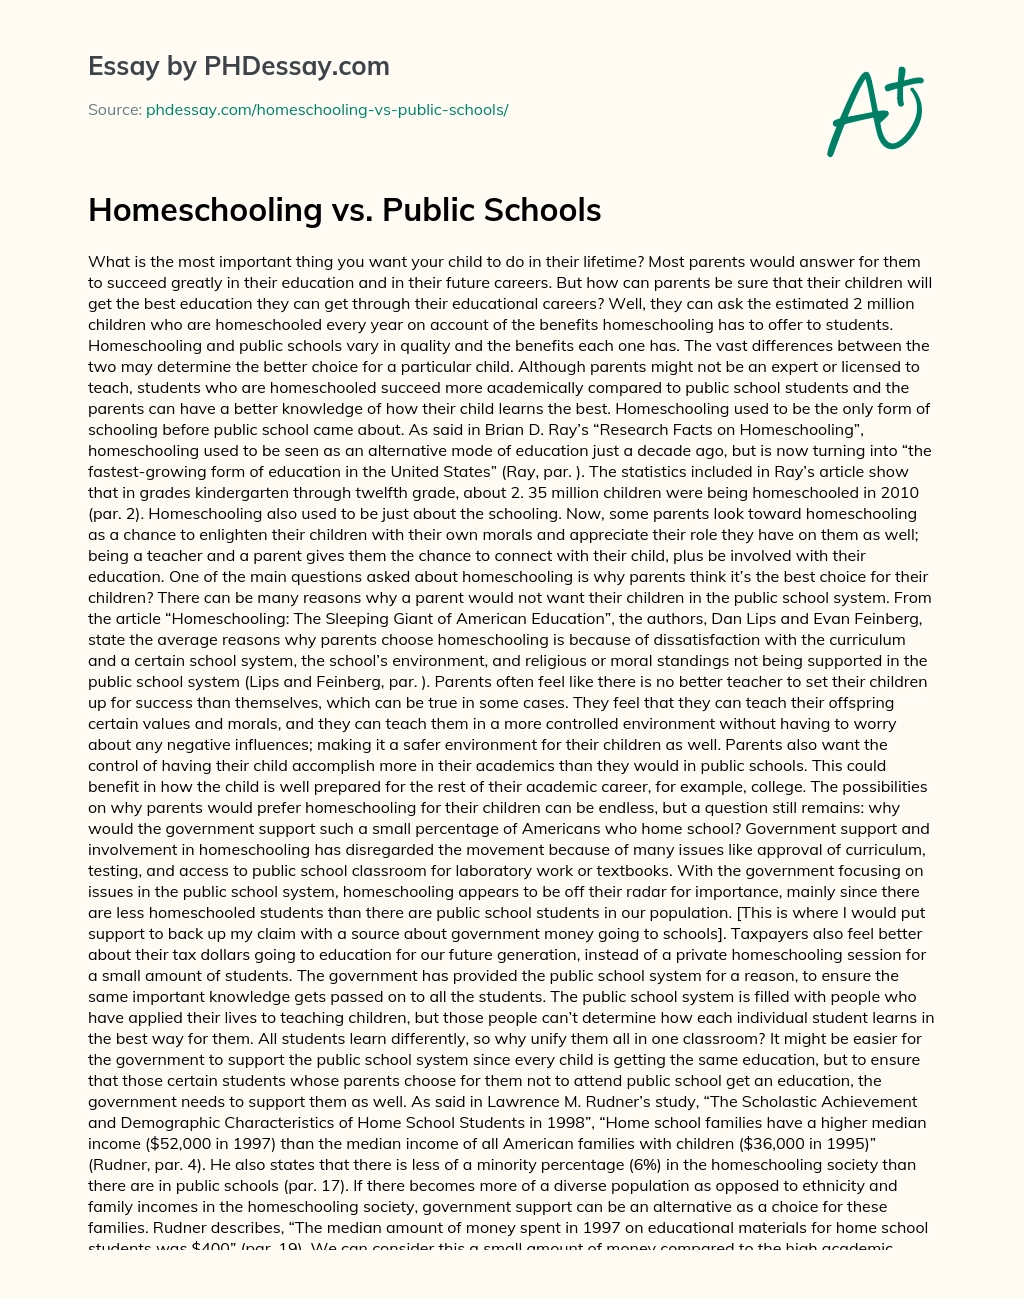 argumentative essay on homeschooling vs public schooling